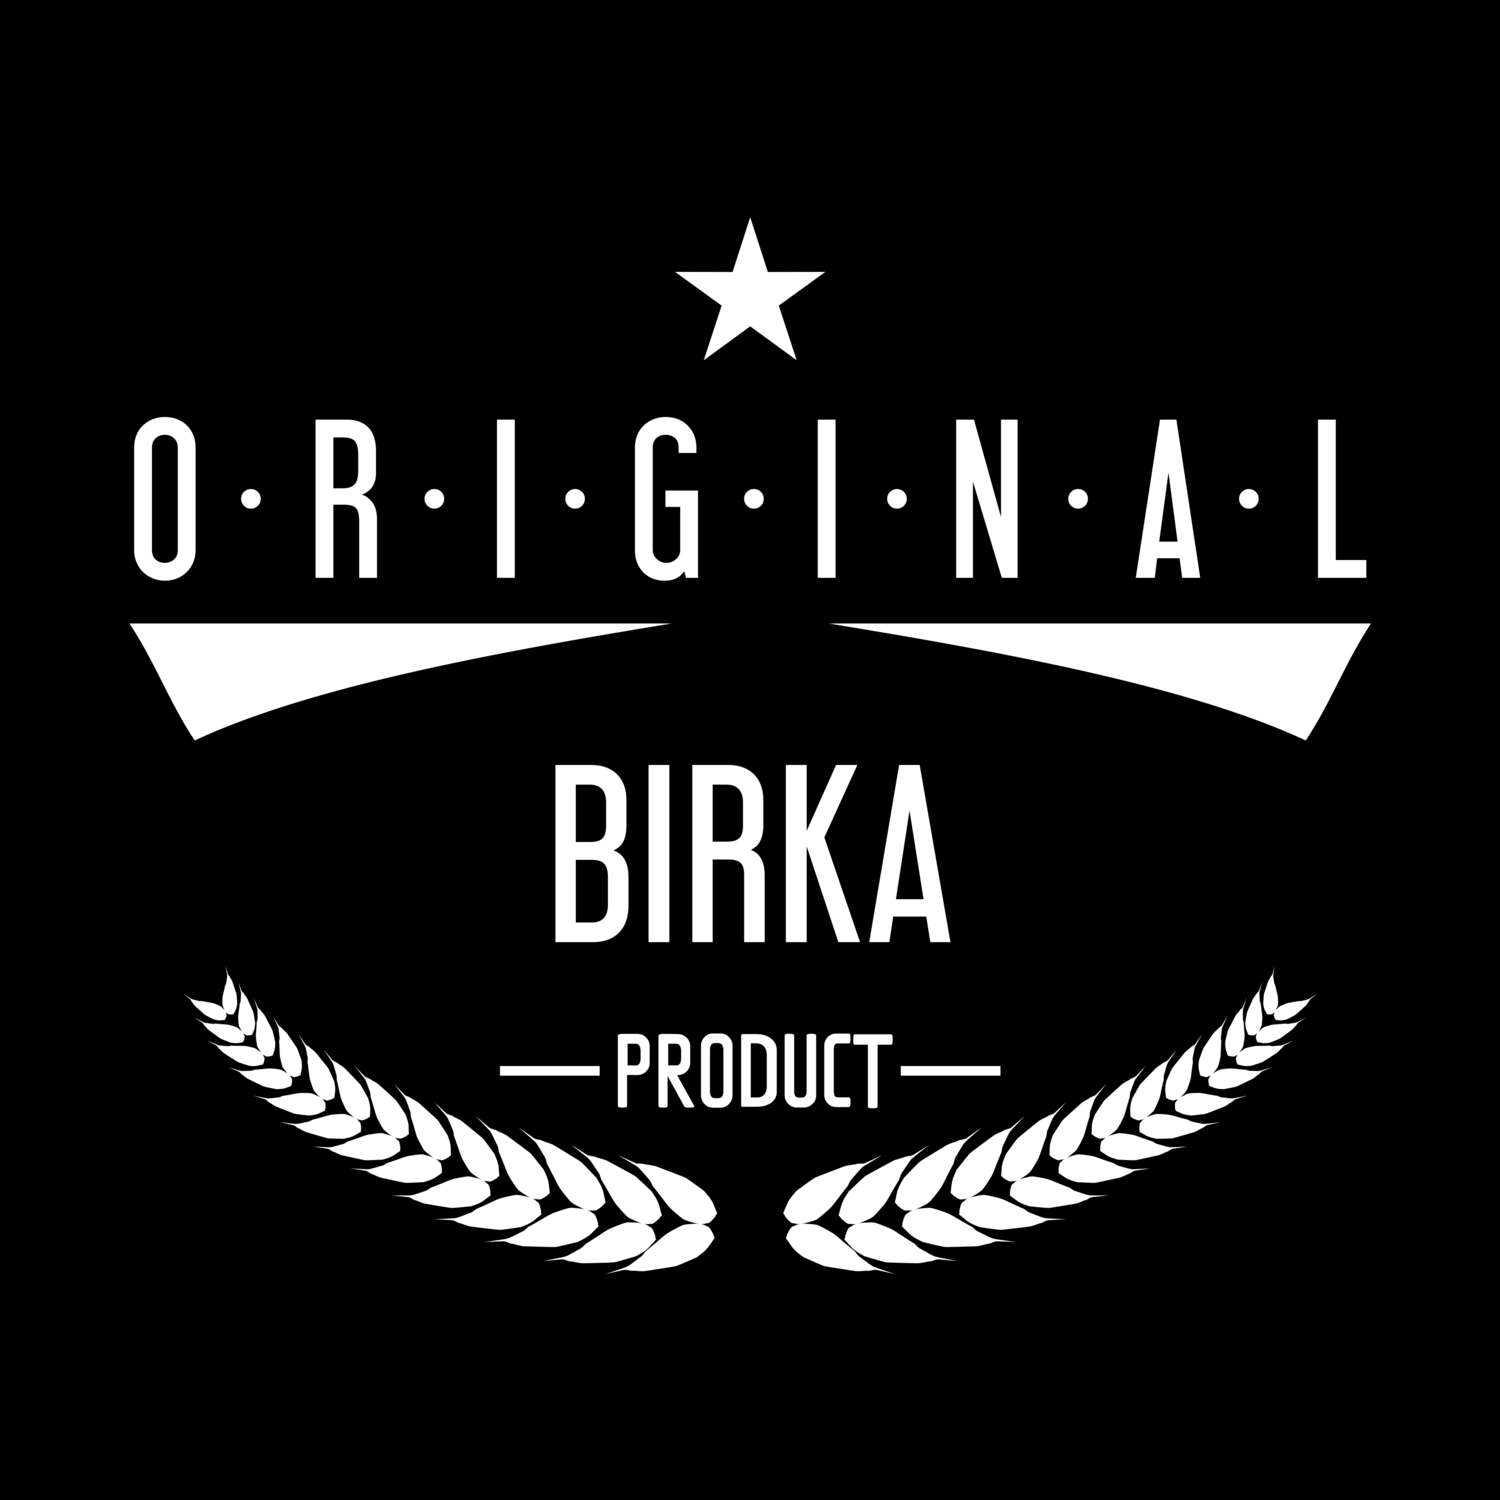 Birka T-Shirt »Original Product«